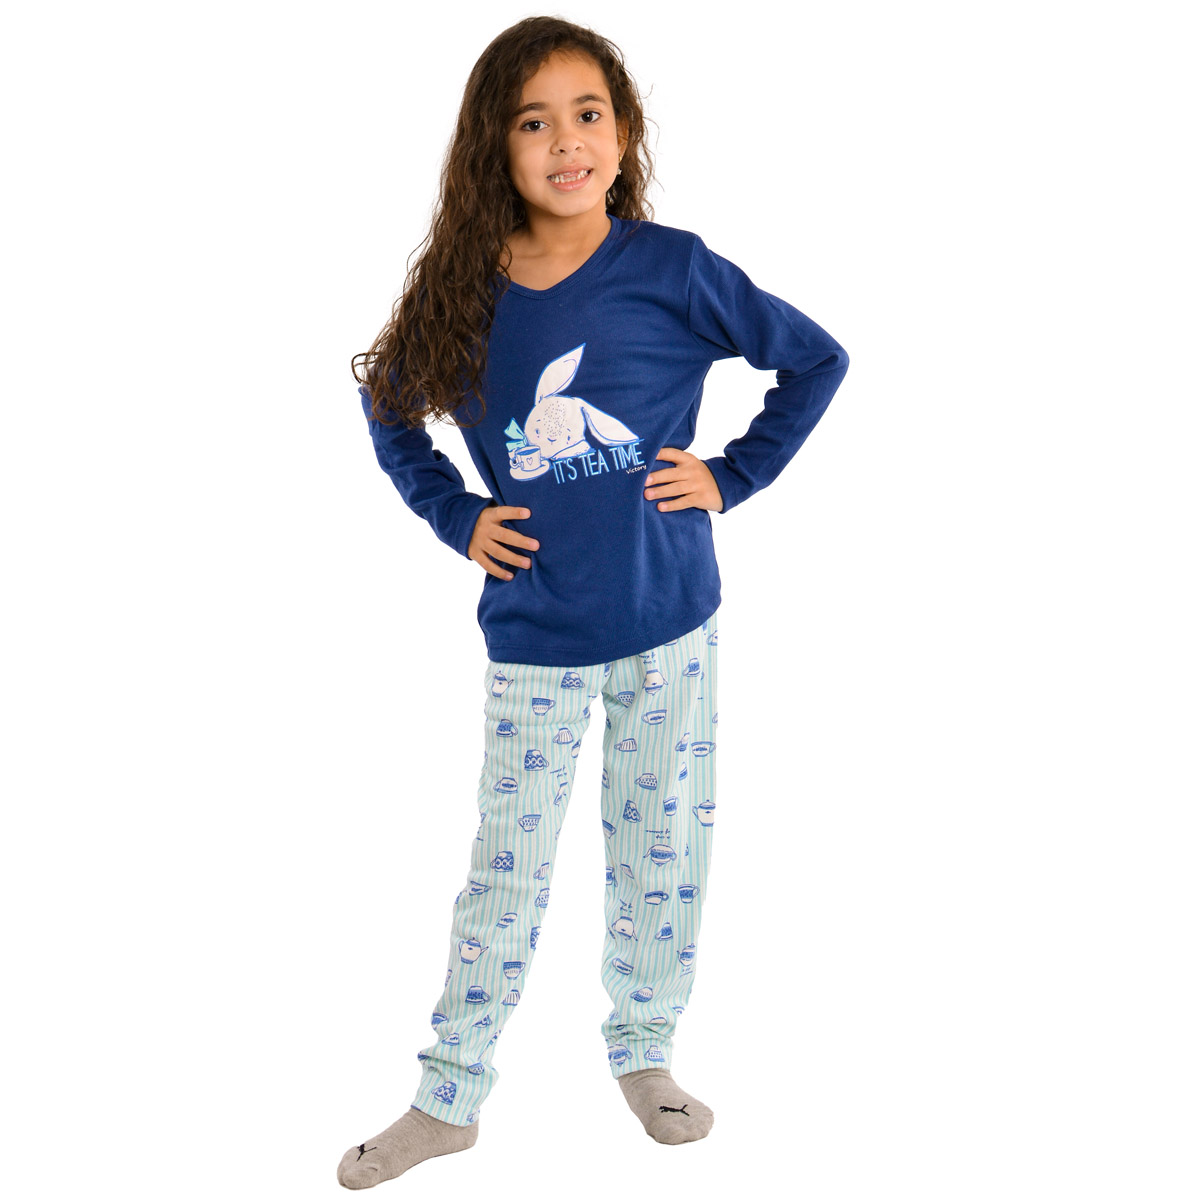 Pijama de inverno infantil para menina SWEET Victory - Bra Lingerie